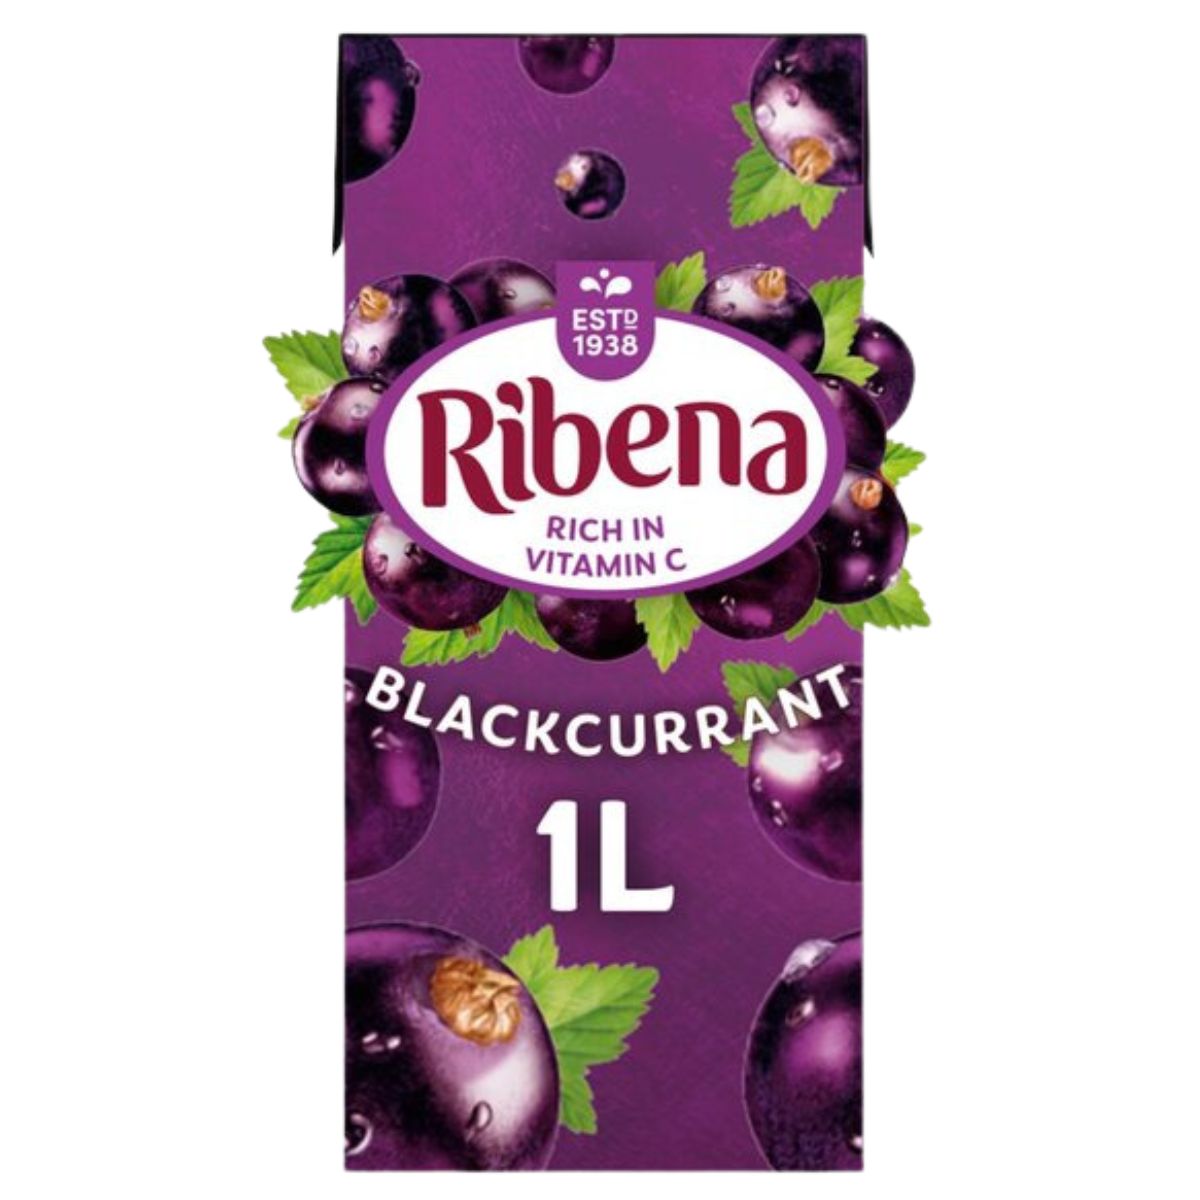 Ribena - Blackcurrant Juice Drink - 1L.